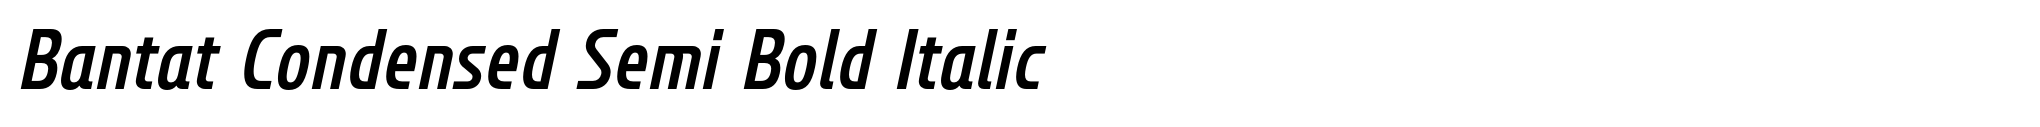 Bantat Condensed Semi Bold Italic image